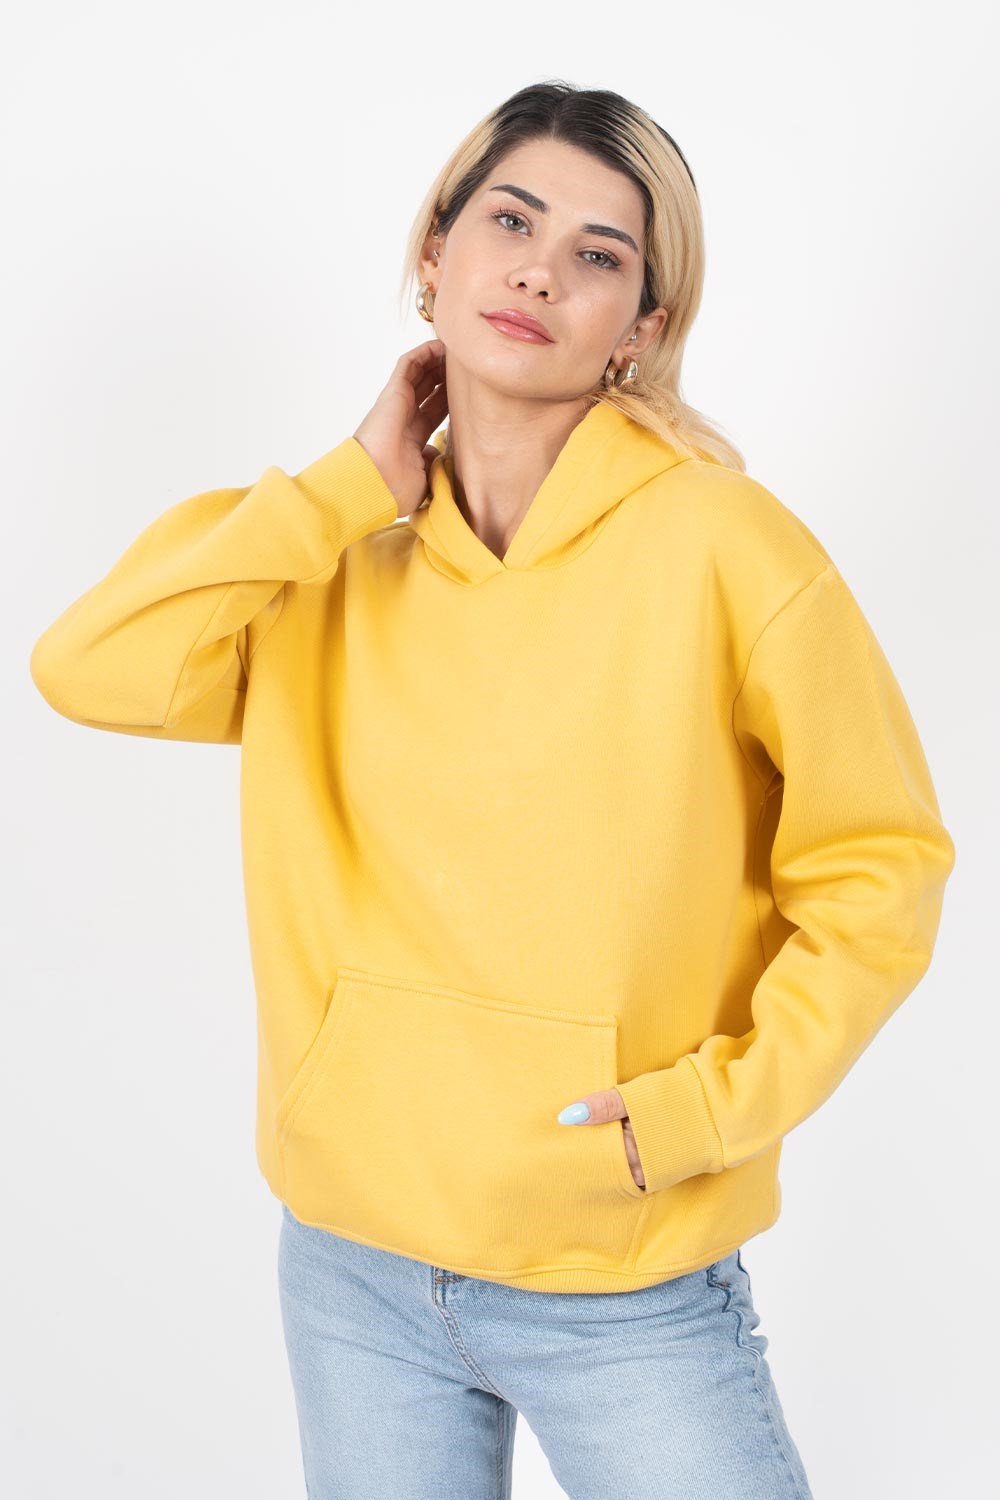 Kadın Hardal Sarısı Kapüşonlu Sweatshirt | Pranga Giyim